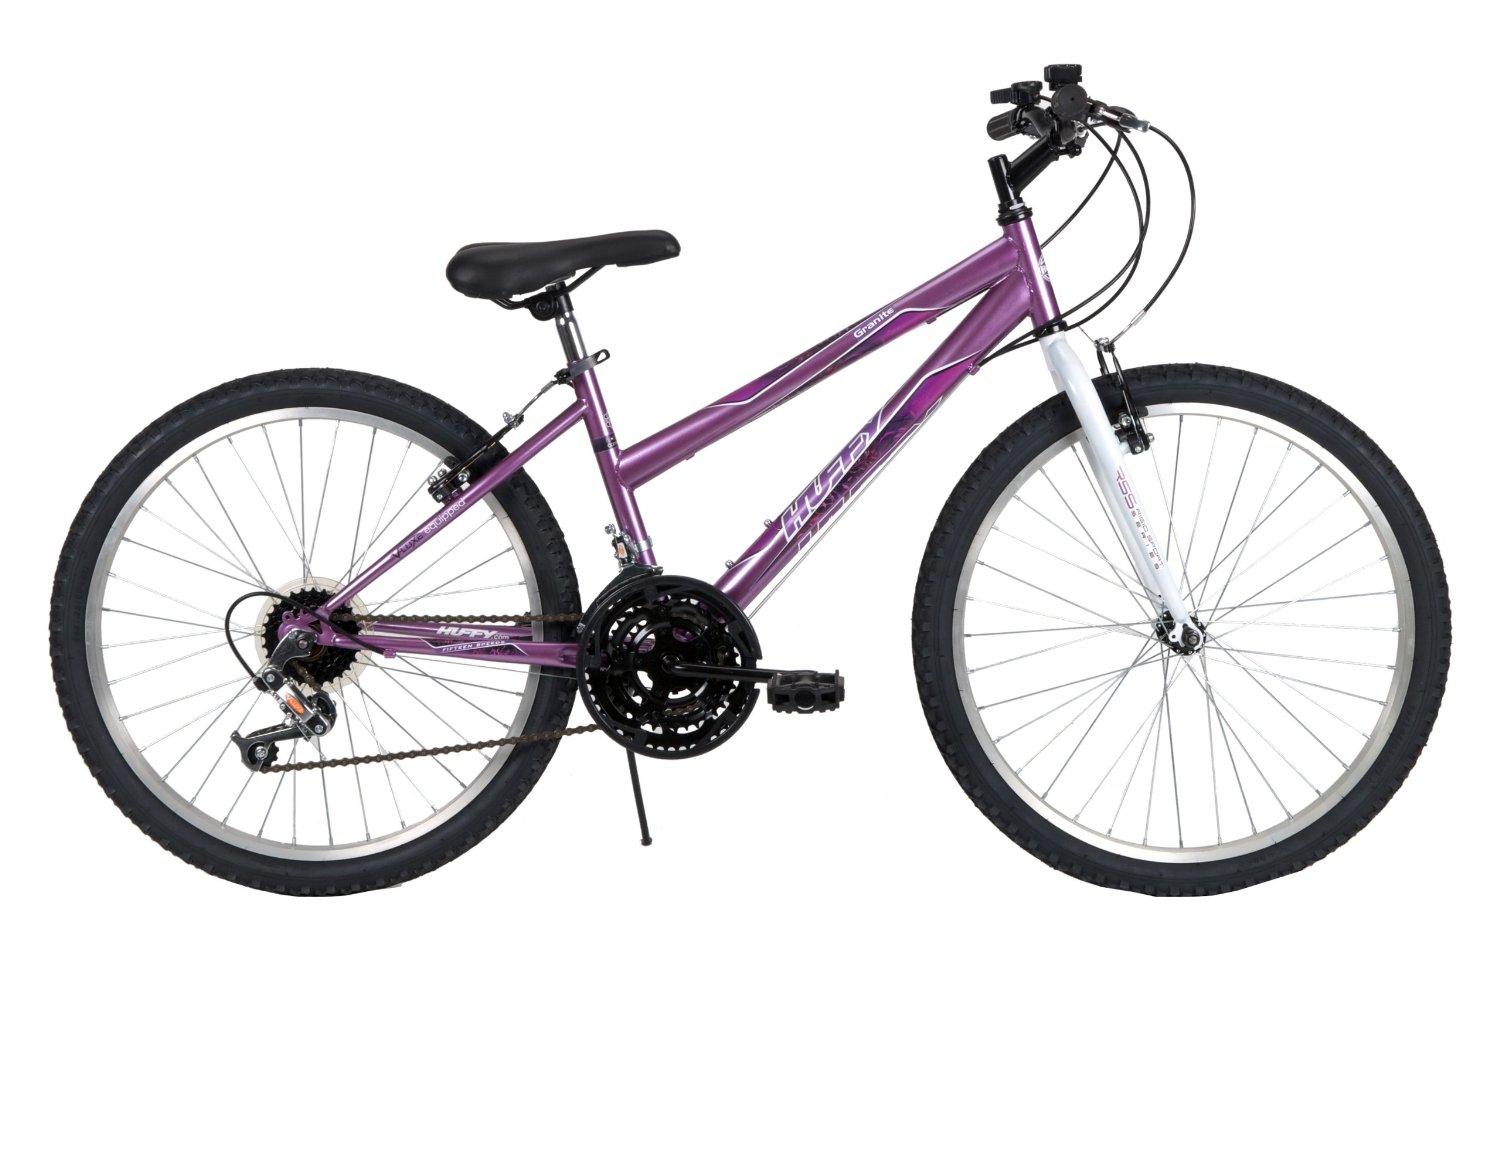 Huffy Bicycle Company Women's 24514 Granite Bike, Metallic Purple, 24-Inch